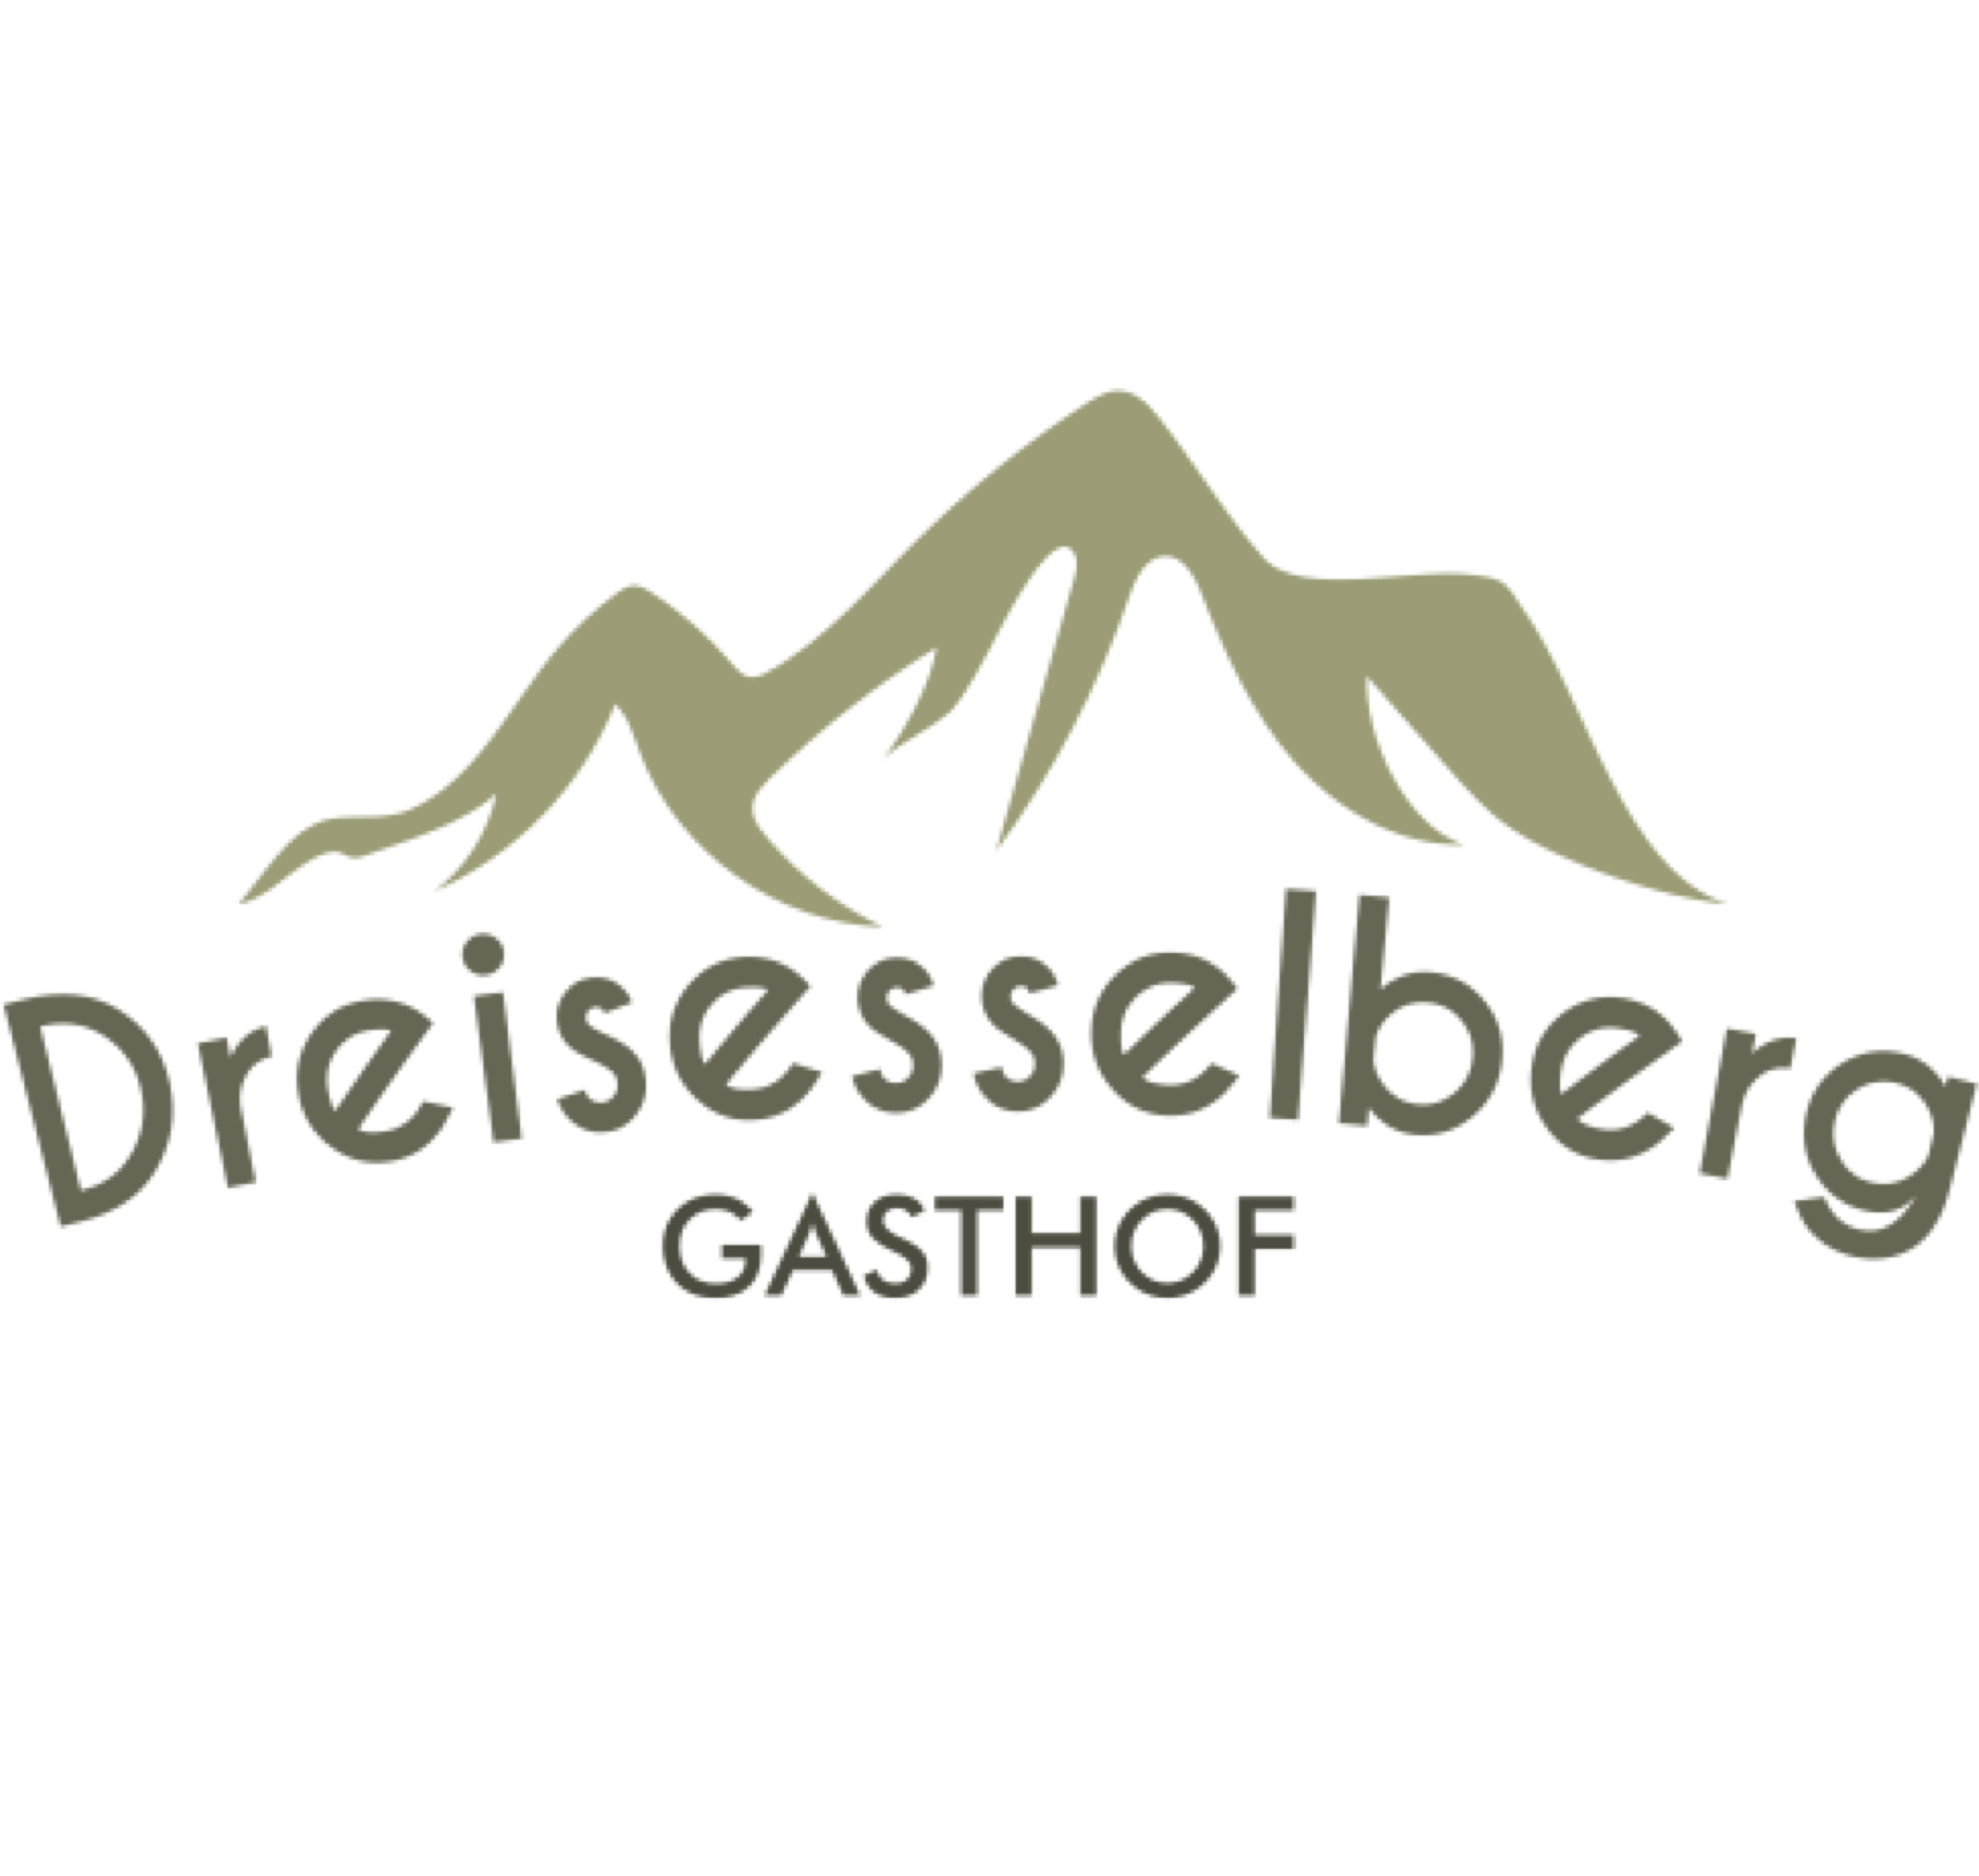 Gasthof Dreisesselberg Logo